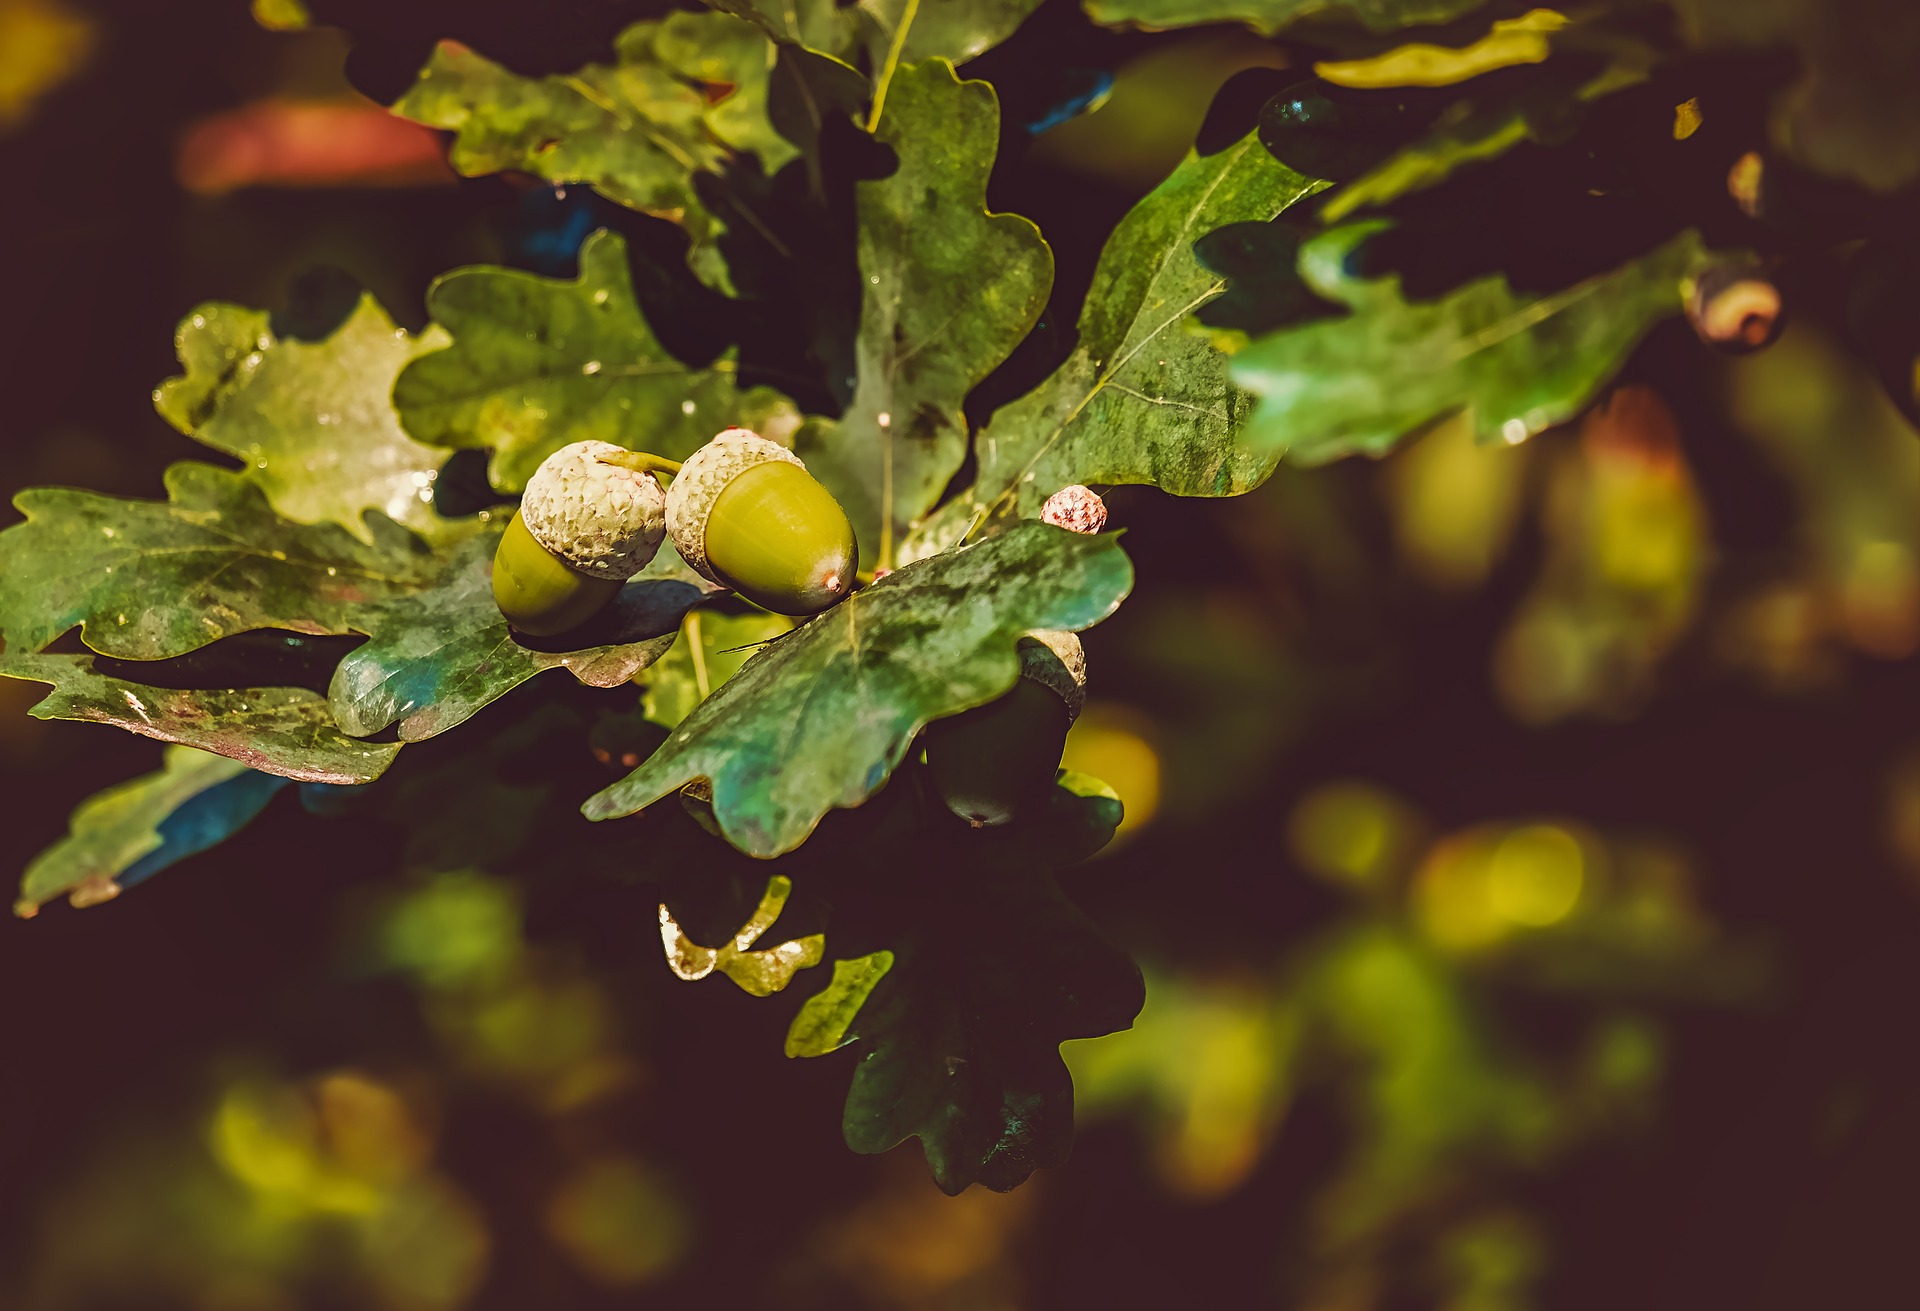 acorns are the easiest way to identify oak trees backyard biodiversity